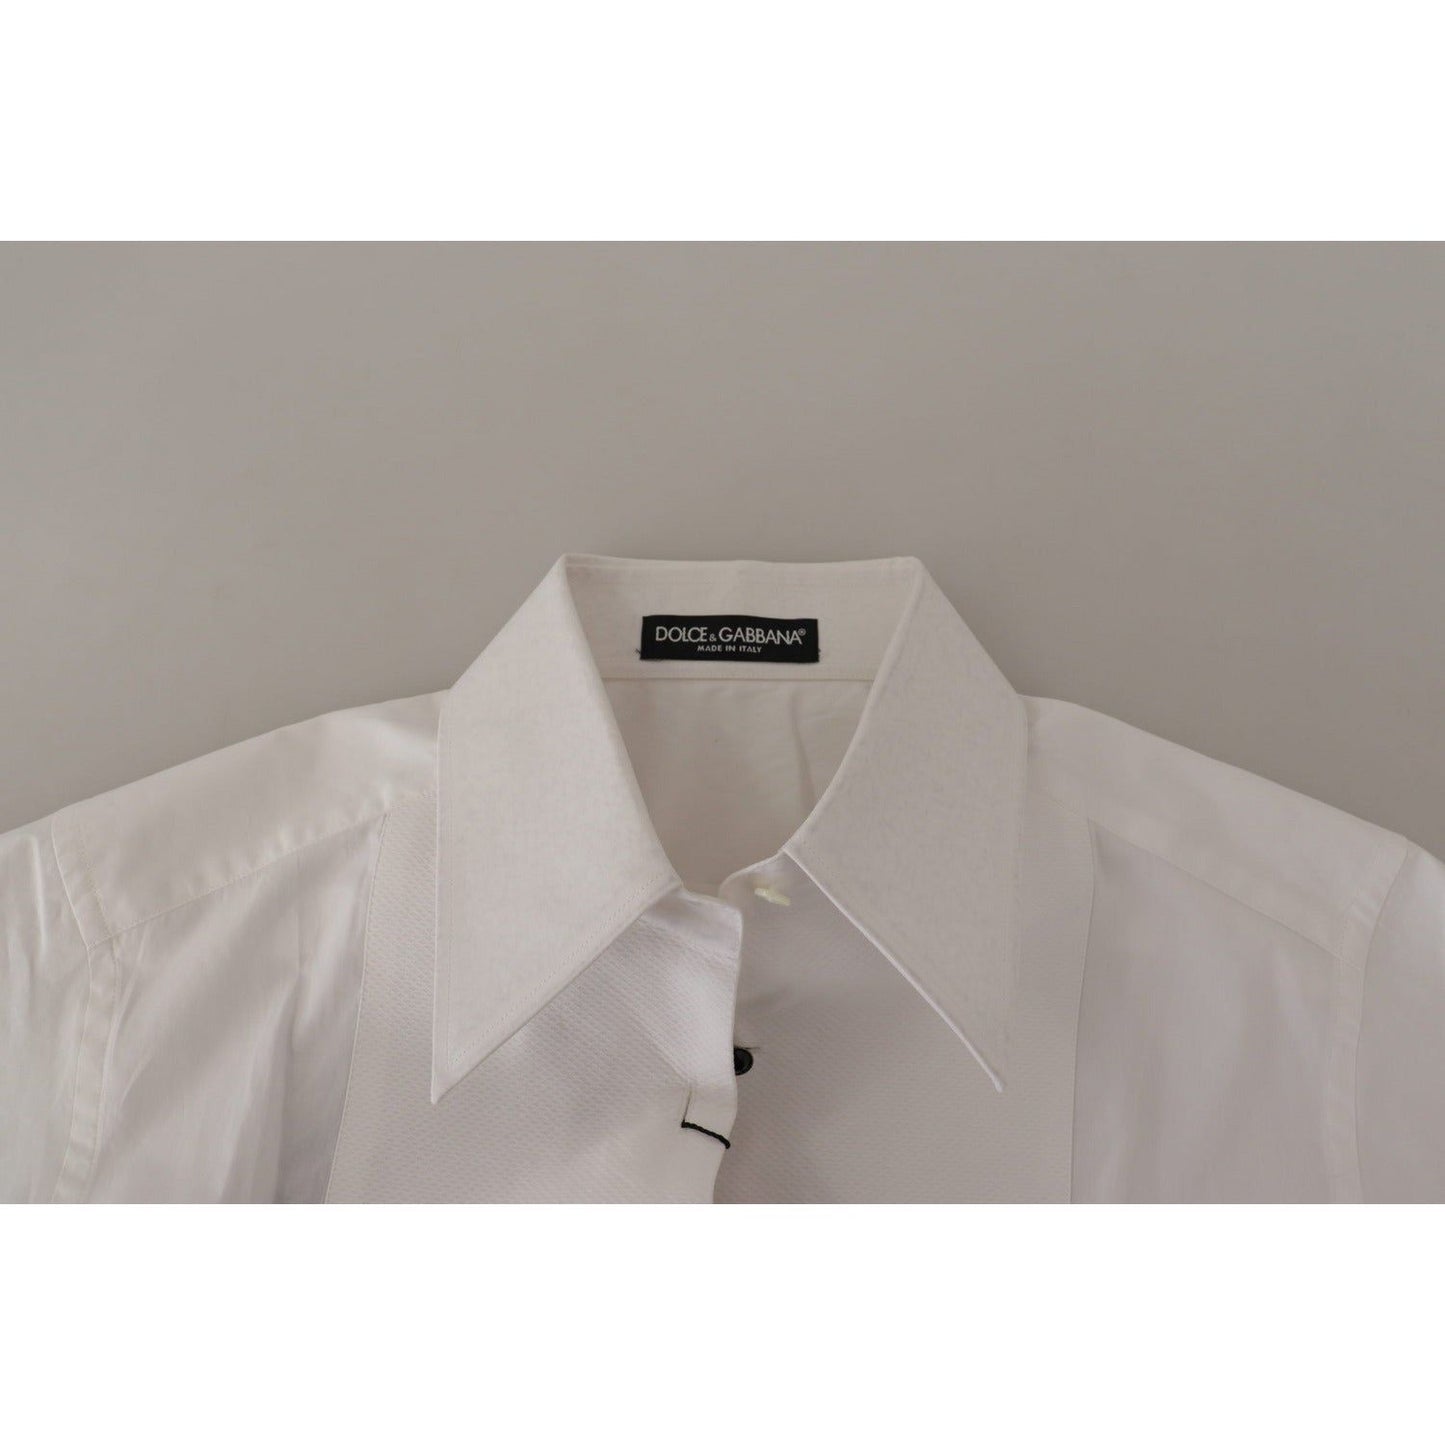 Dolce & GabbanaElegant Sleeveless Tuxedo Blouse with Crystal ButtonsMcRichard Designer Brands£359.00